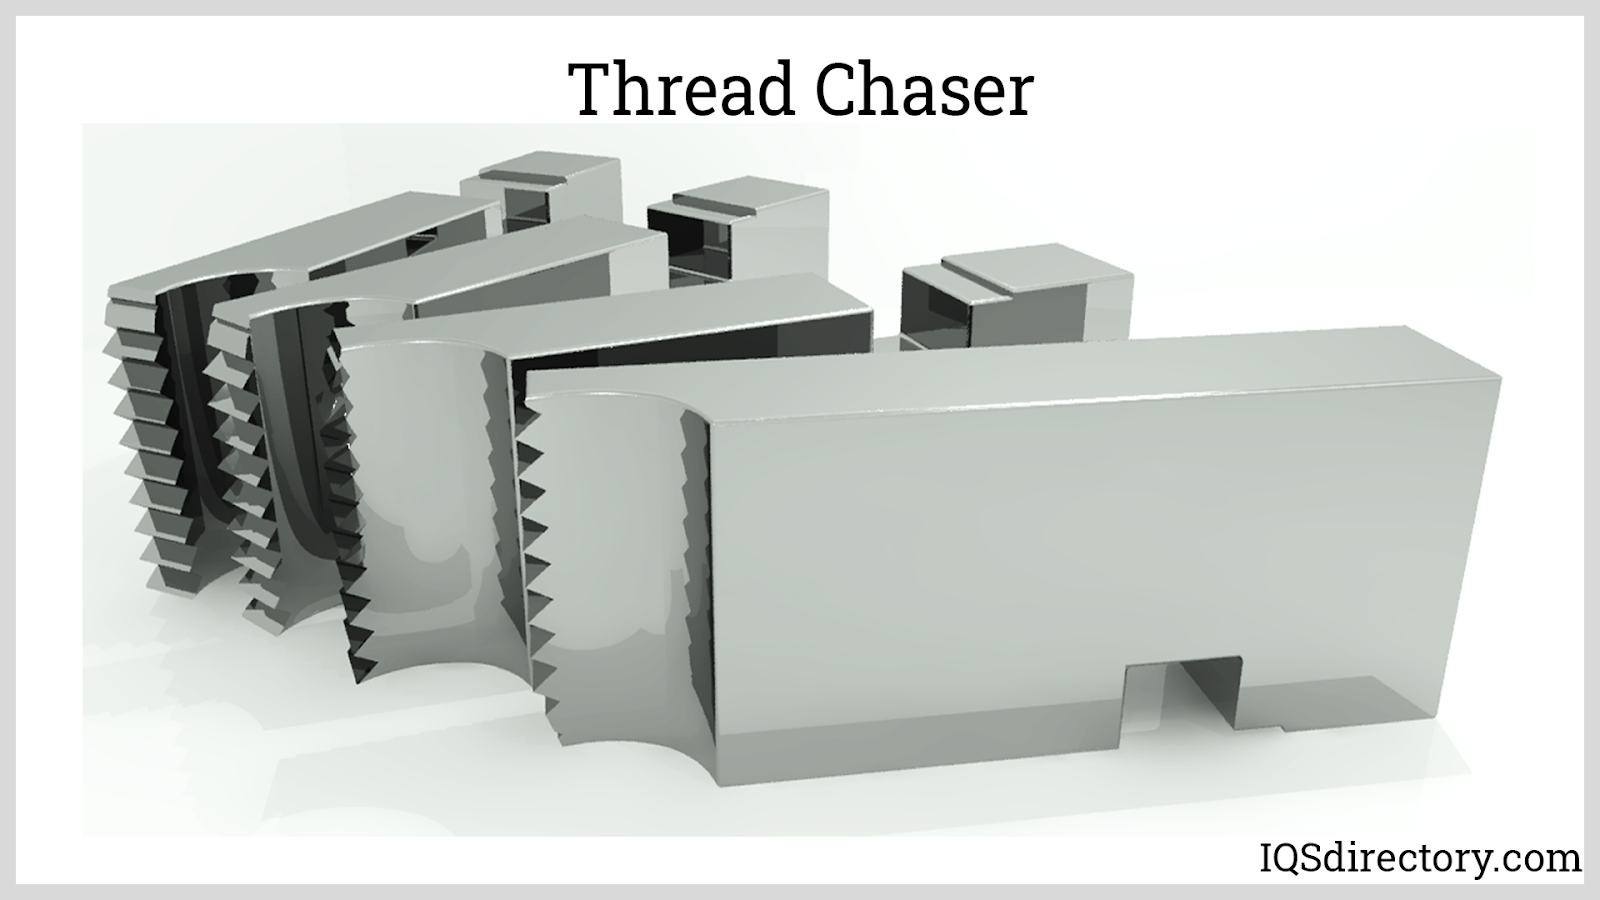 Thread Chaser